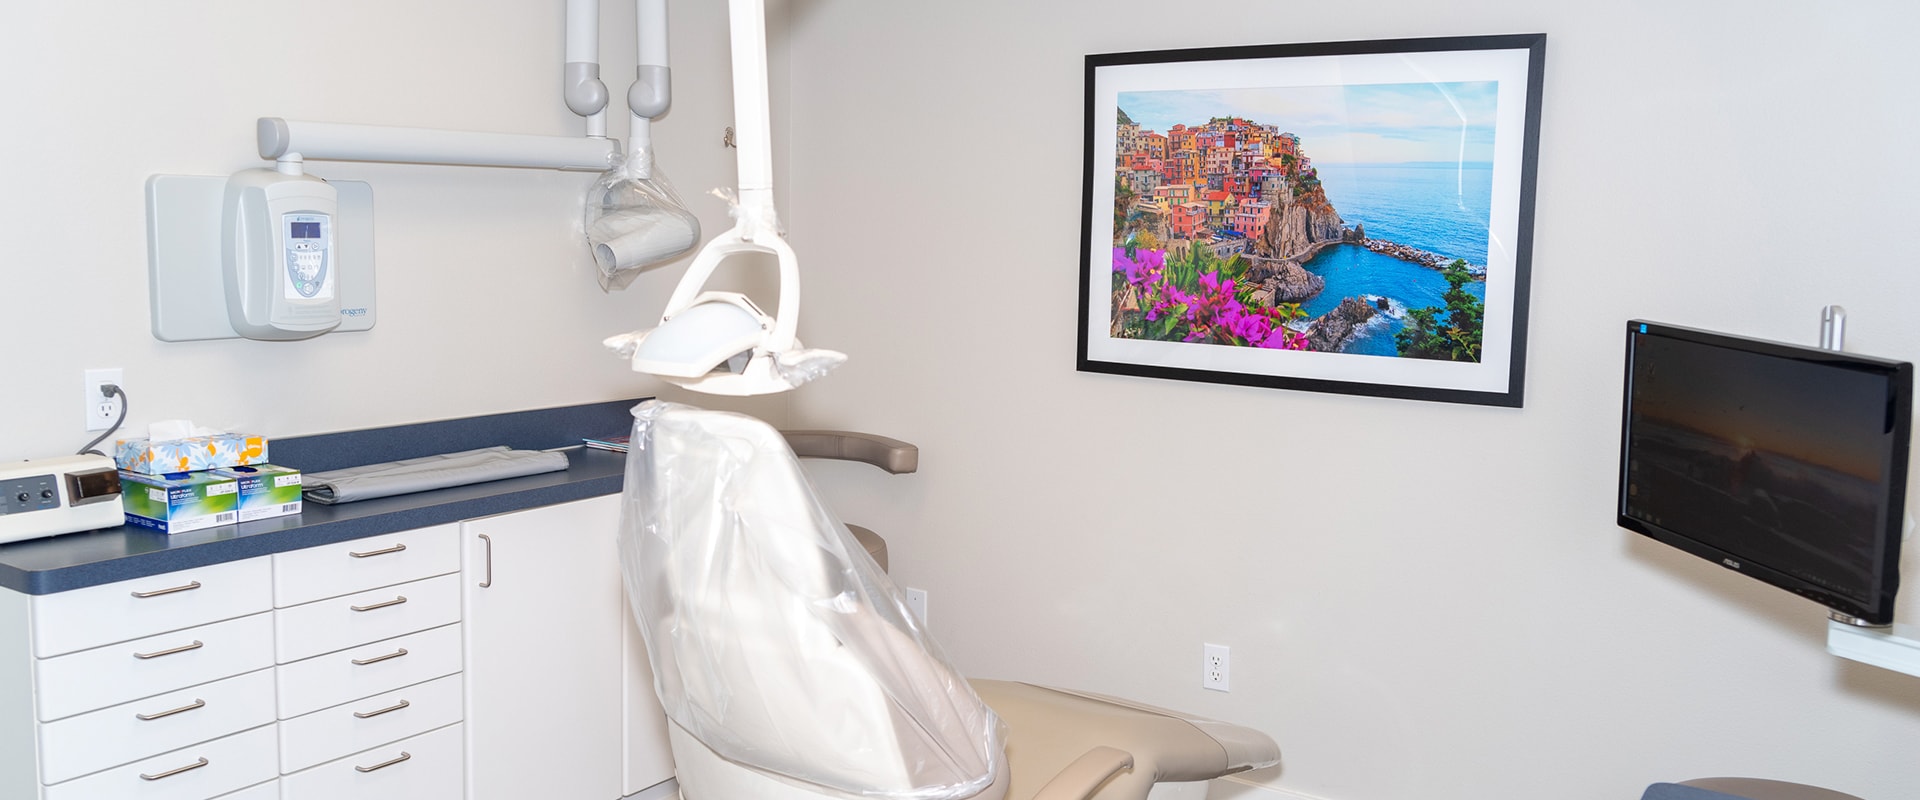 Inside the Dental Consultory Room at Bonney Lake Family Dental Care